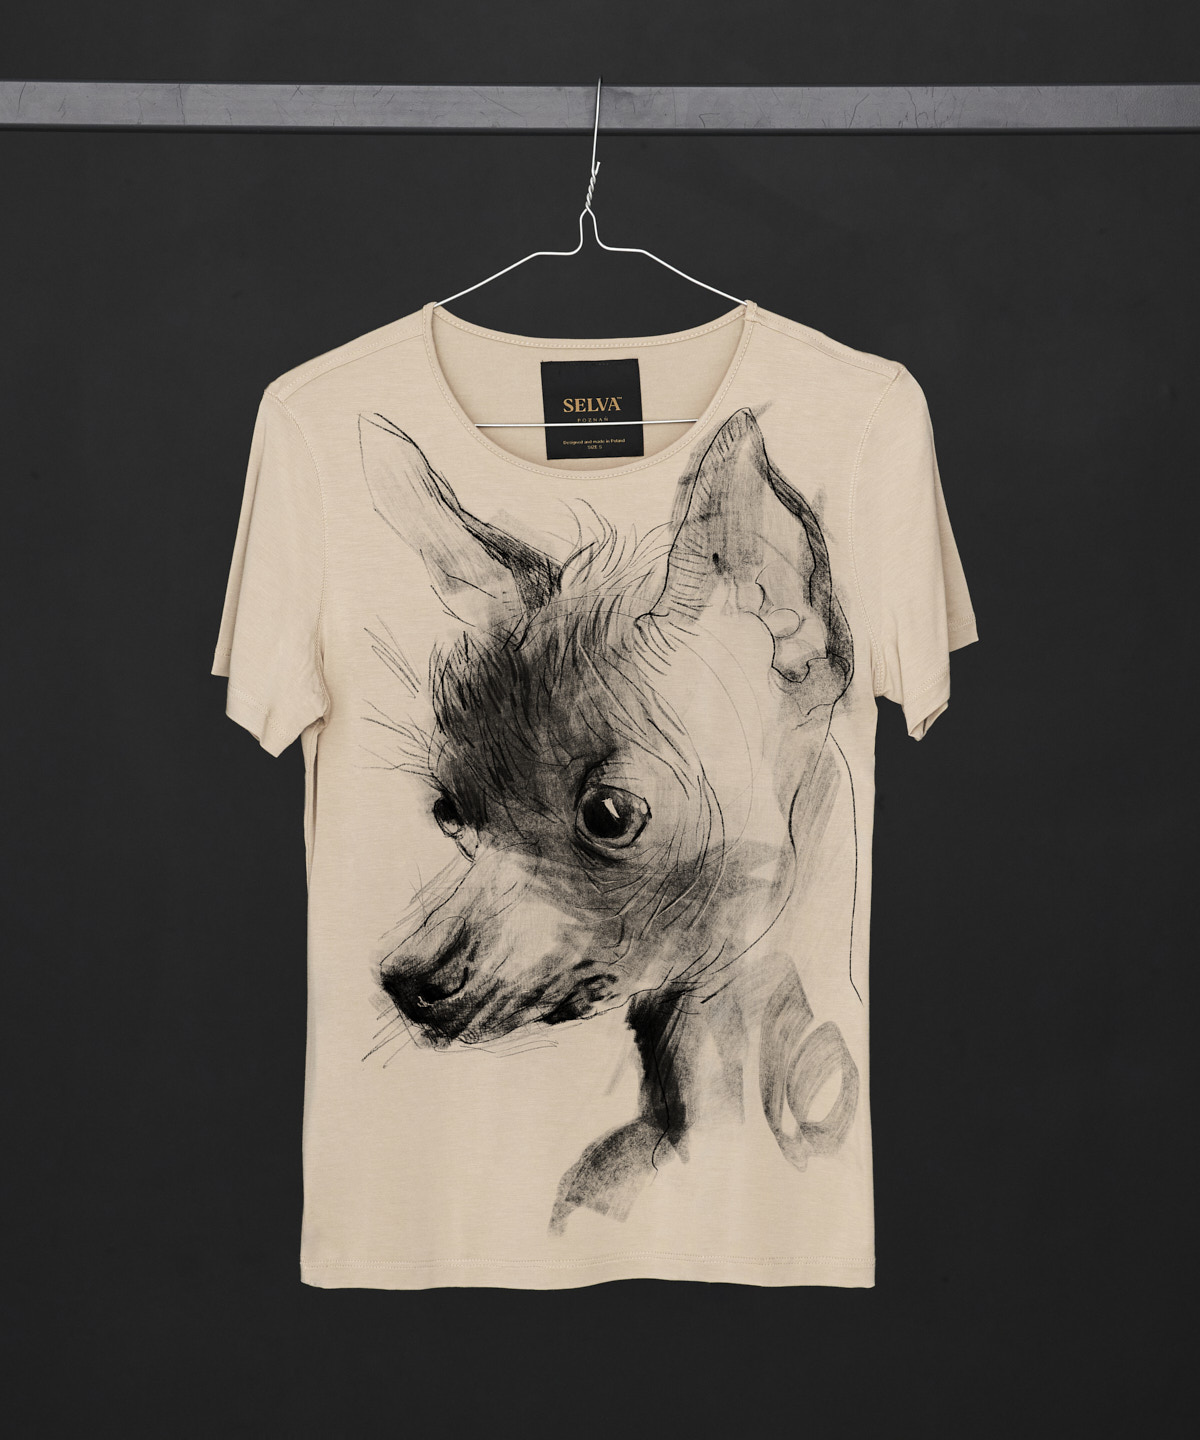 Chinese Crested Dog hummus t-shirt woman